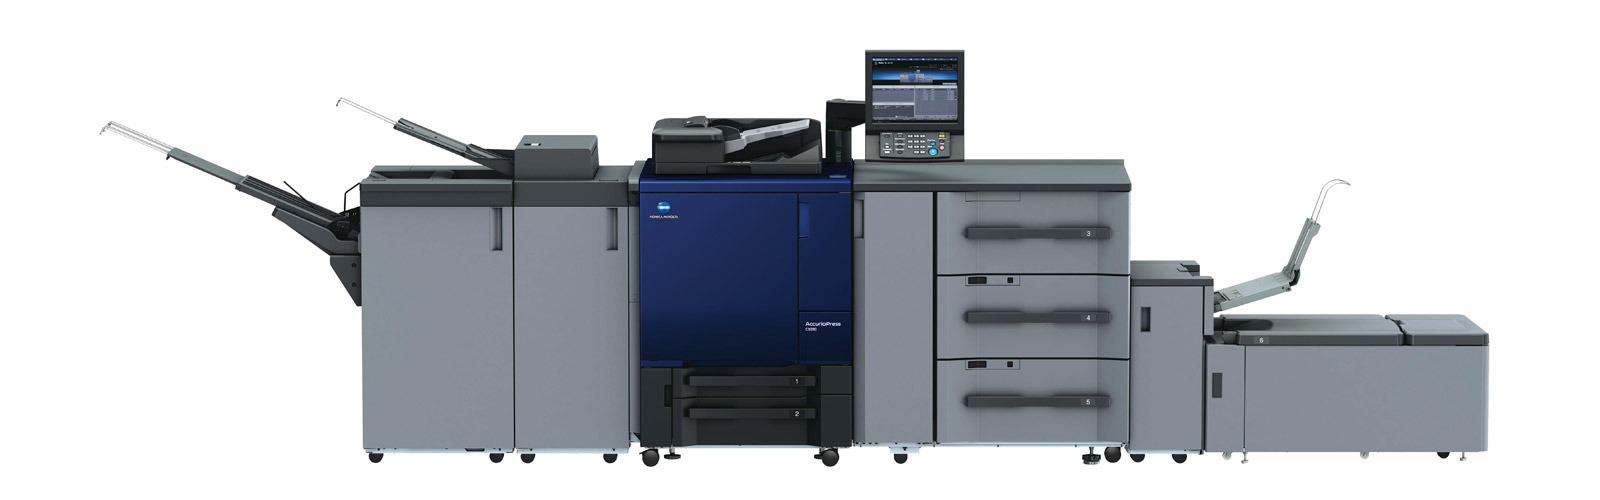 Konica Minolta AccurioPress C3070 Production Print System